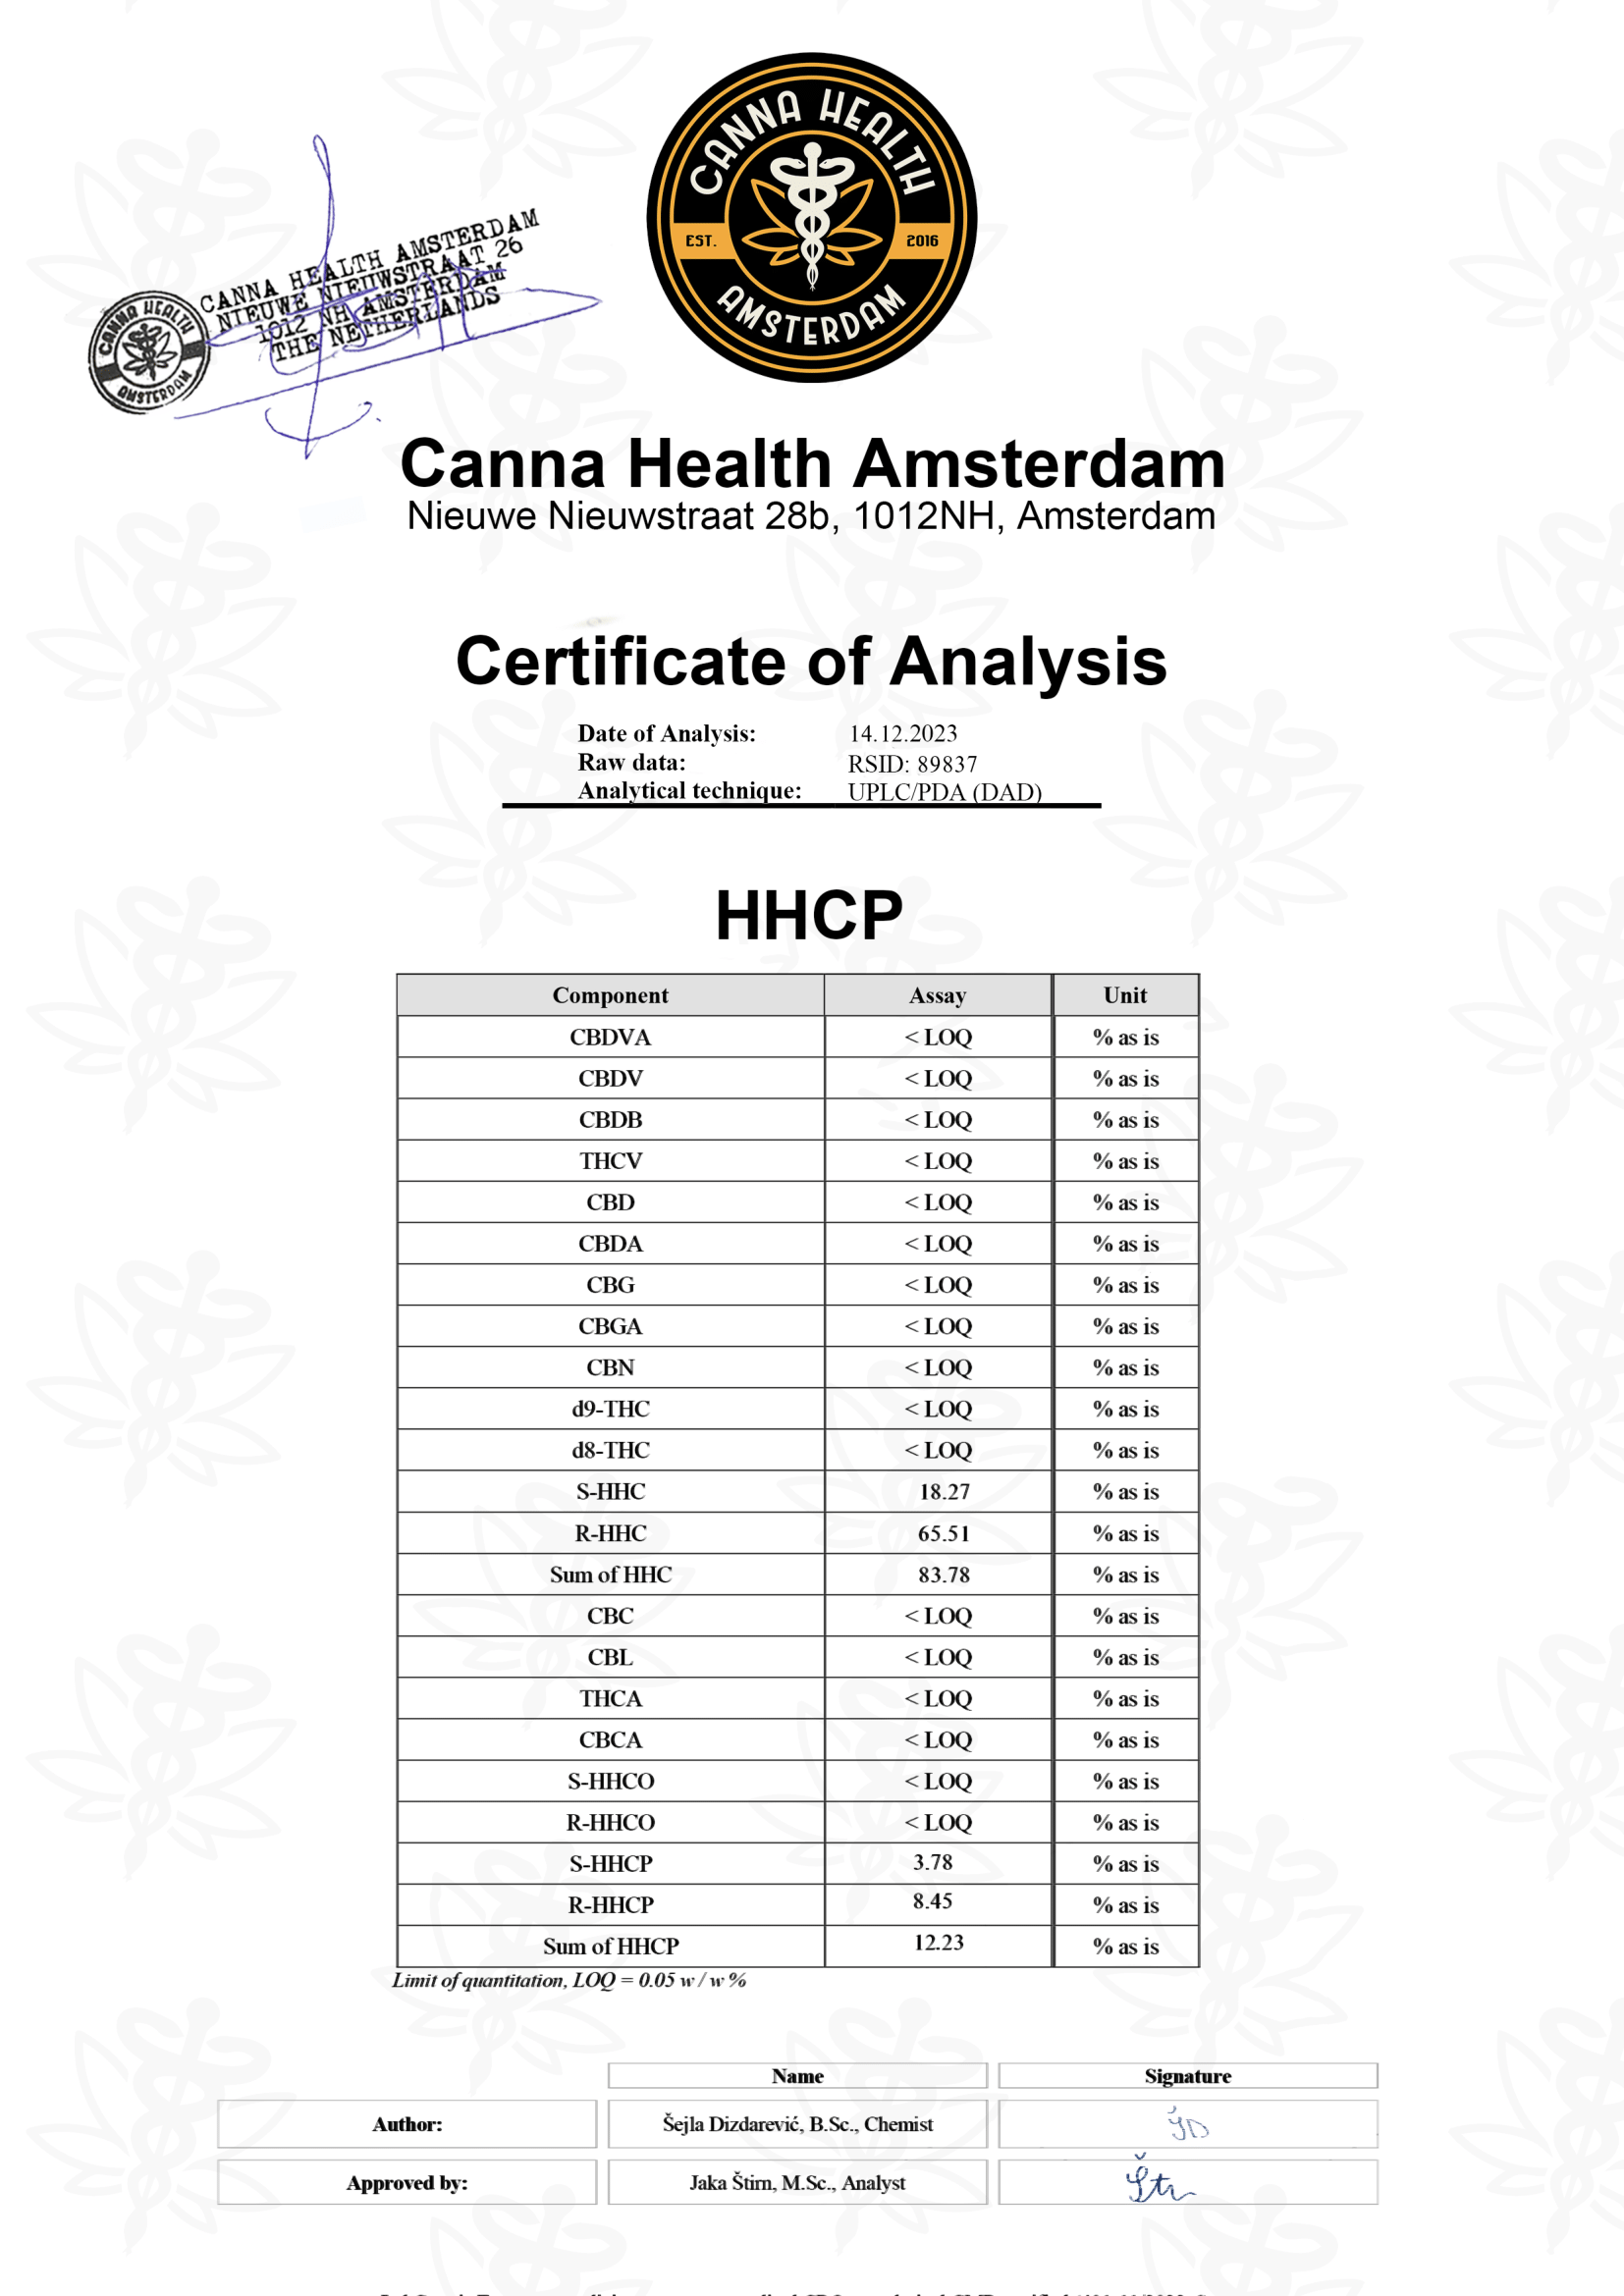 HHCp COA - Canna Health Amsterdam